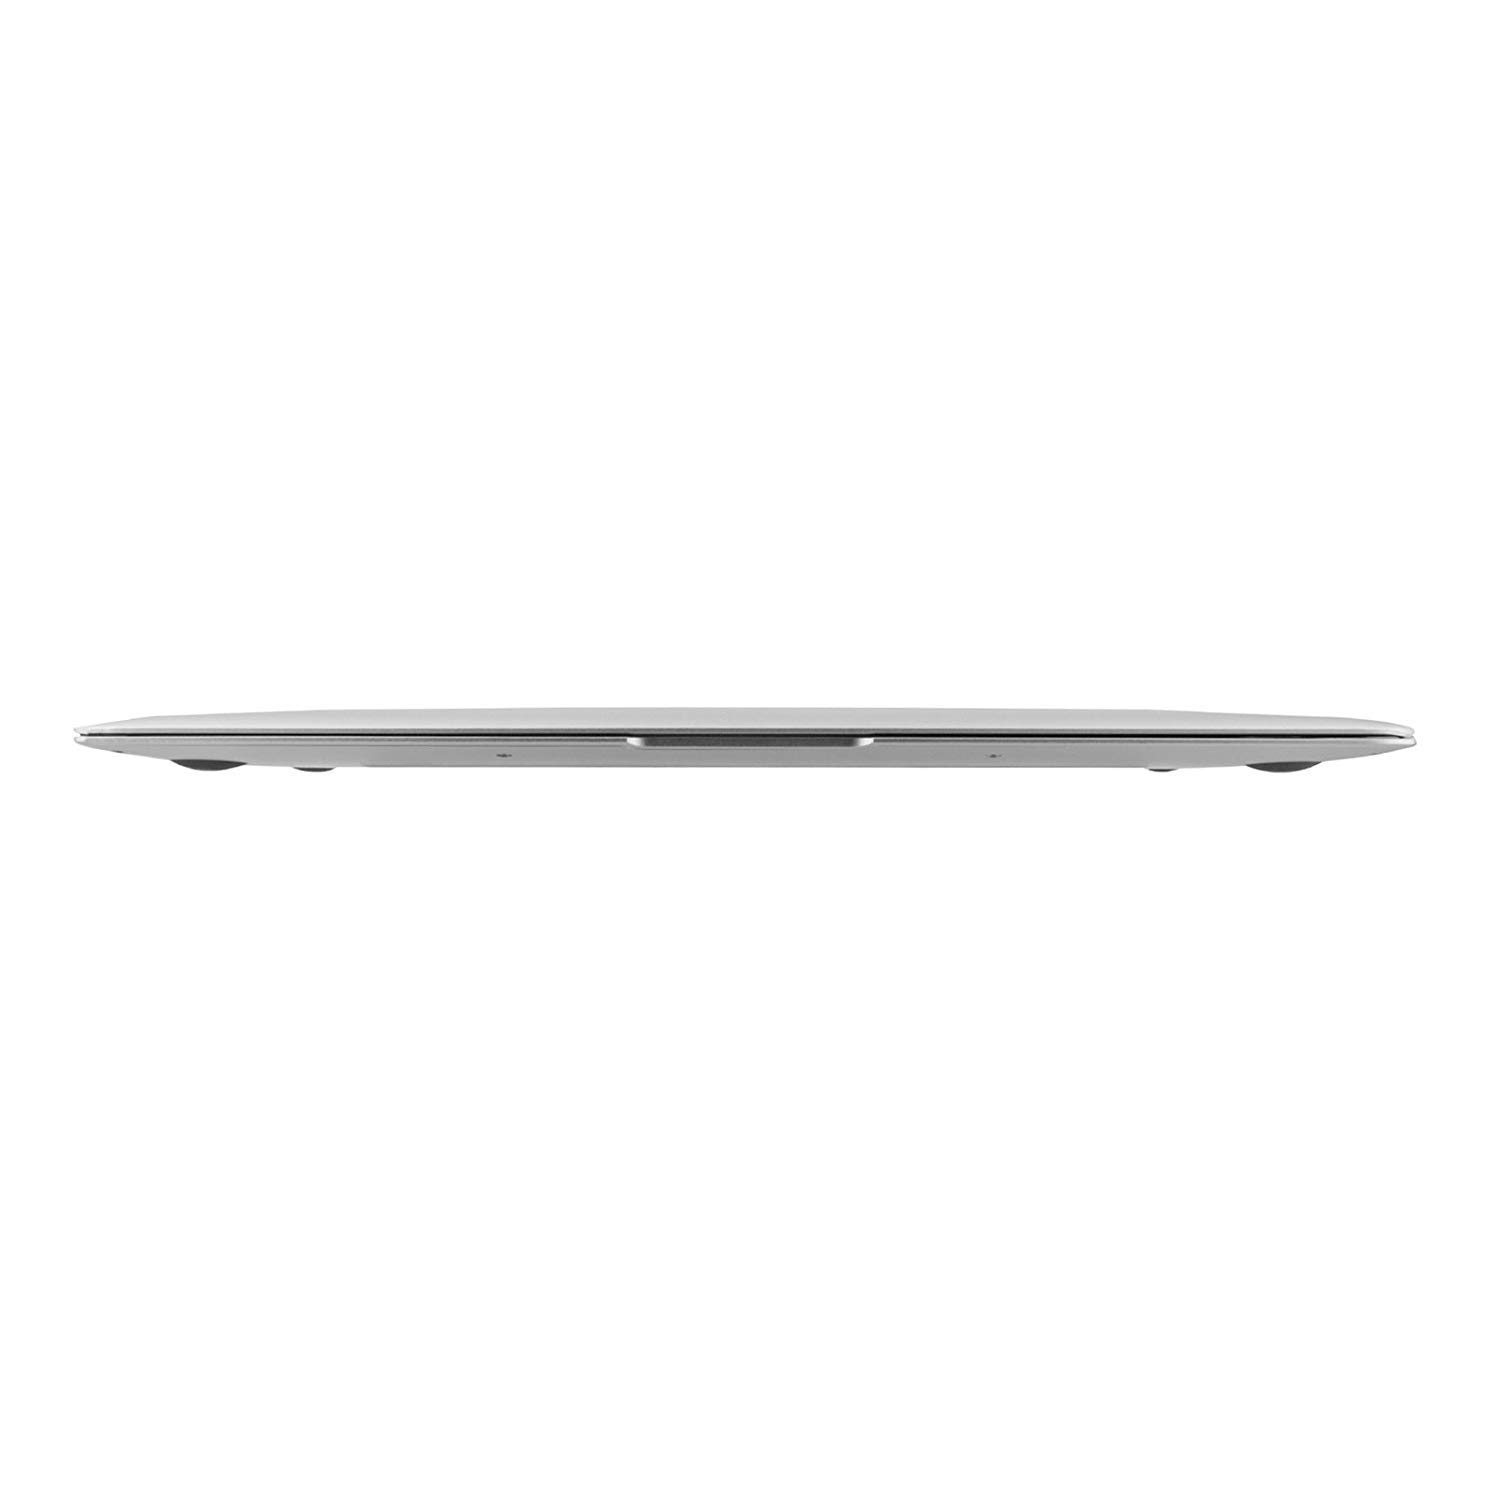 Apple MacBook Air MJVE2LL/A - 13-inch Laptop - 8GB RAM, 512GB SSD, Intel Core i5 (Renewed)